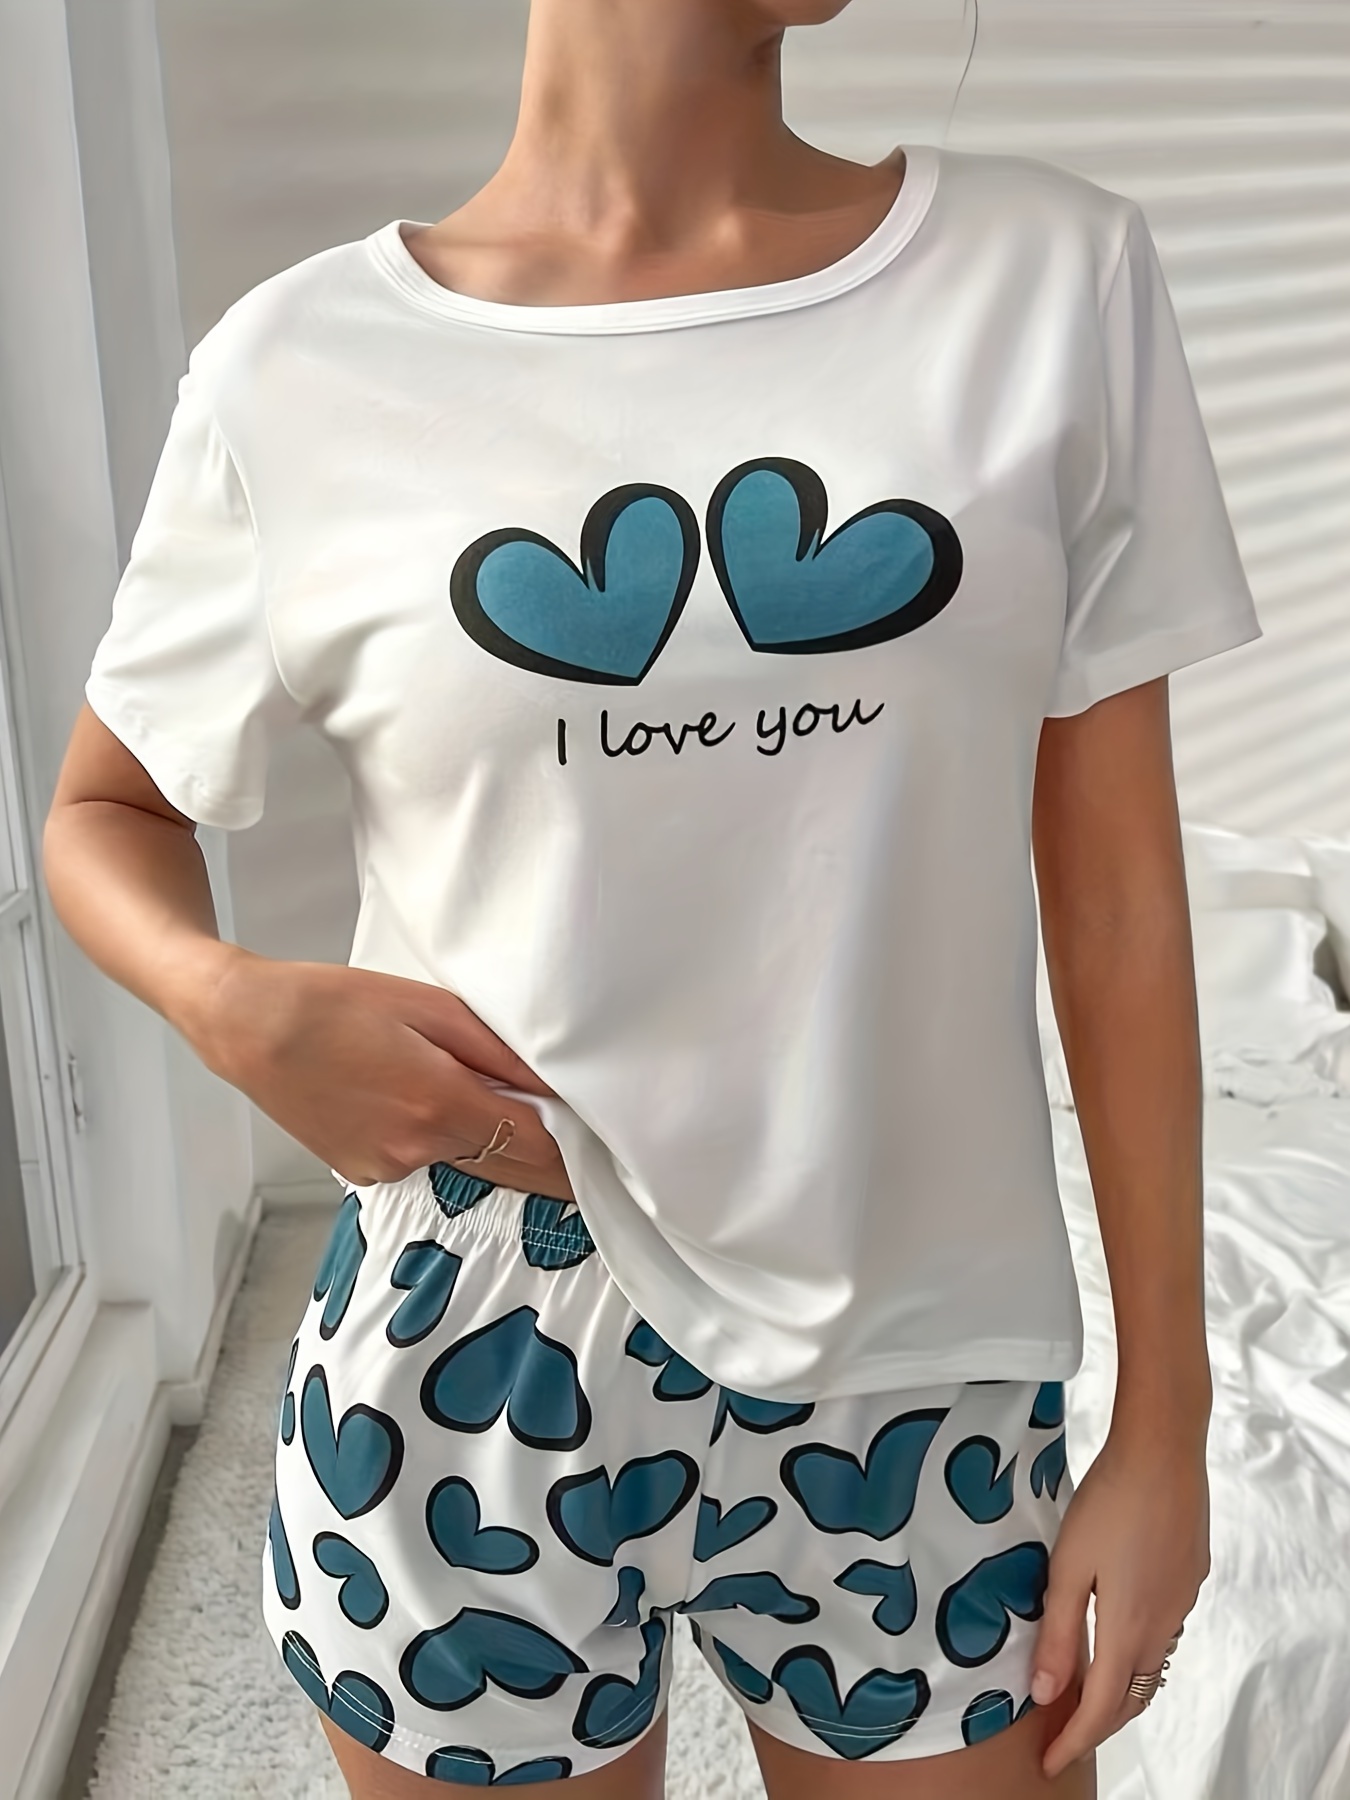 COZYEASE Women's Cute Pajama Set Heart Print Short Sleeve Round Neck Tee Top  and Pants Pajama Sets Sleepwear Soft Black XS at  Women's Clothing  store